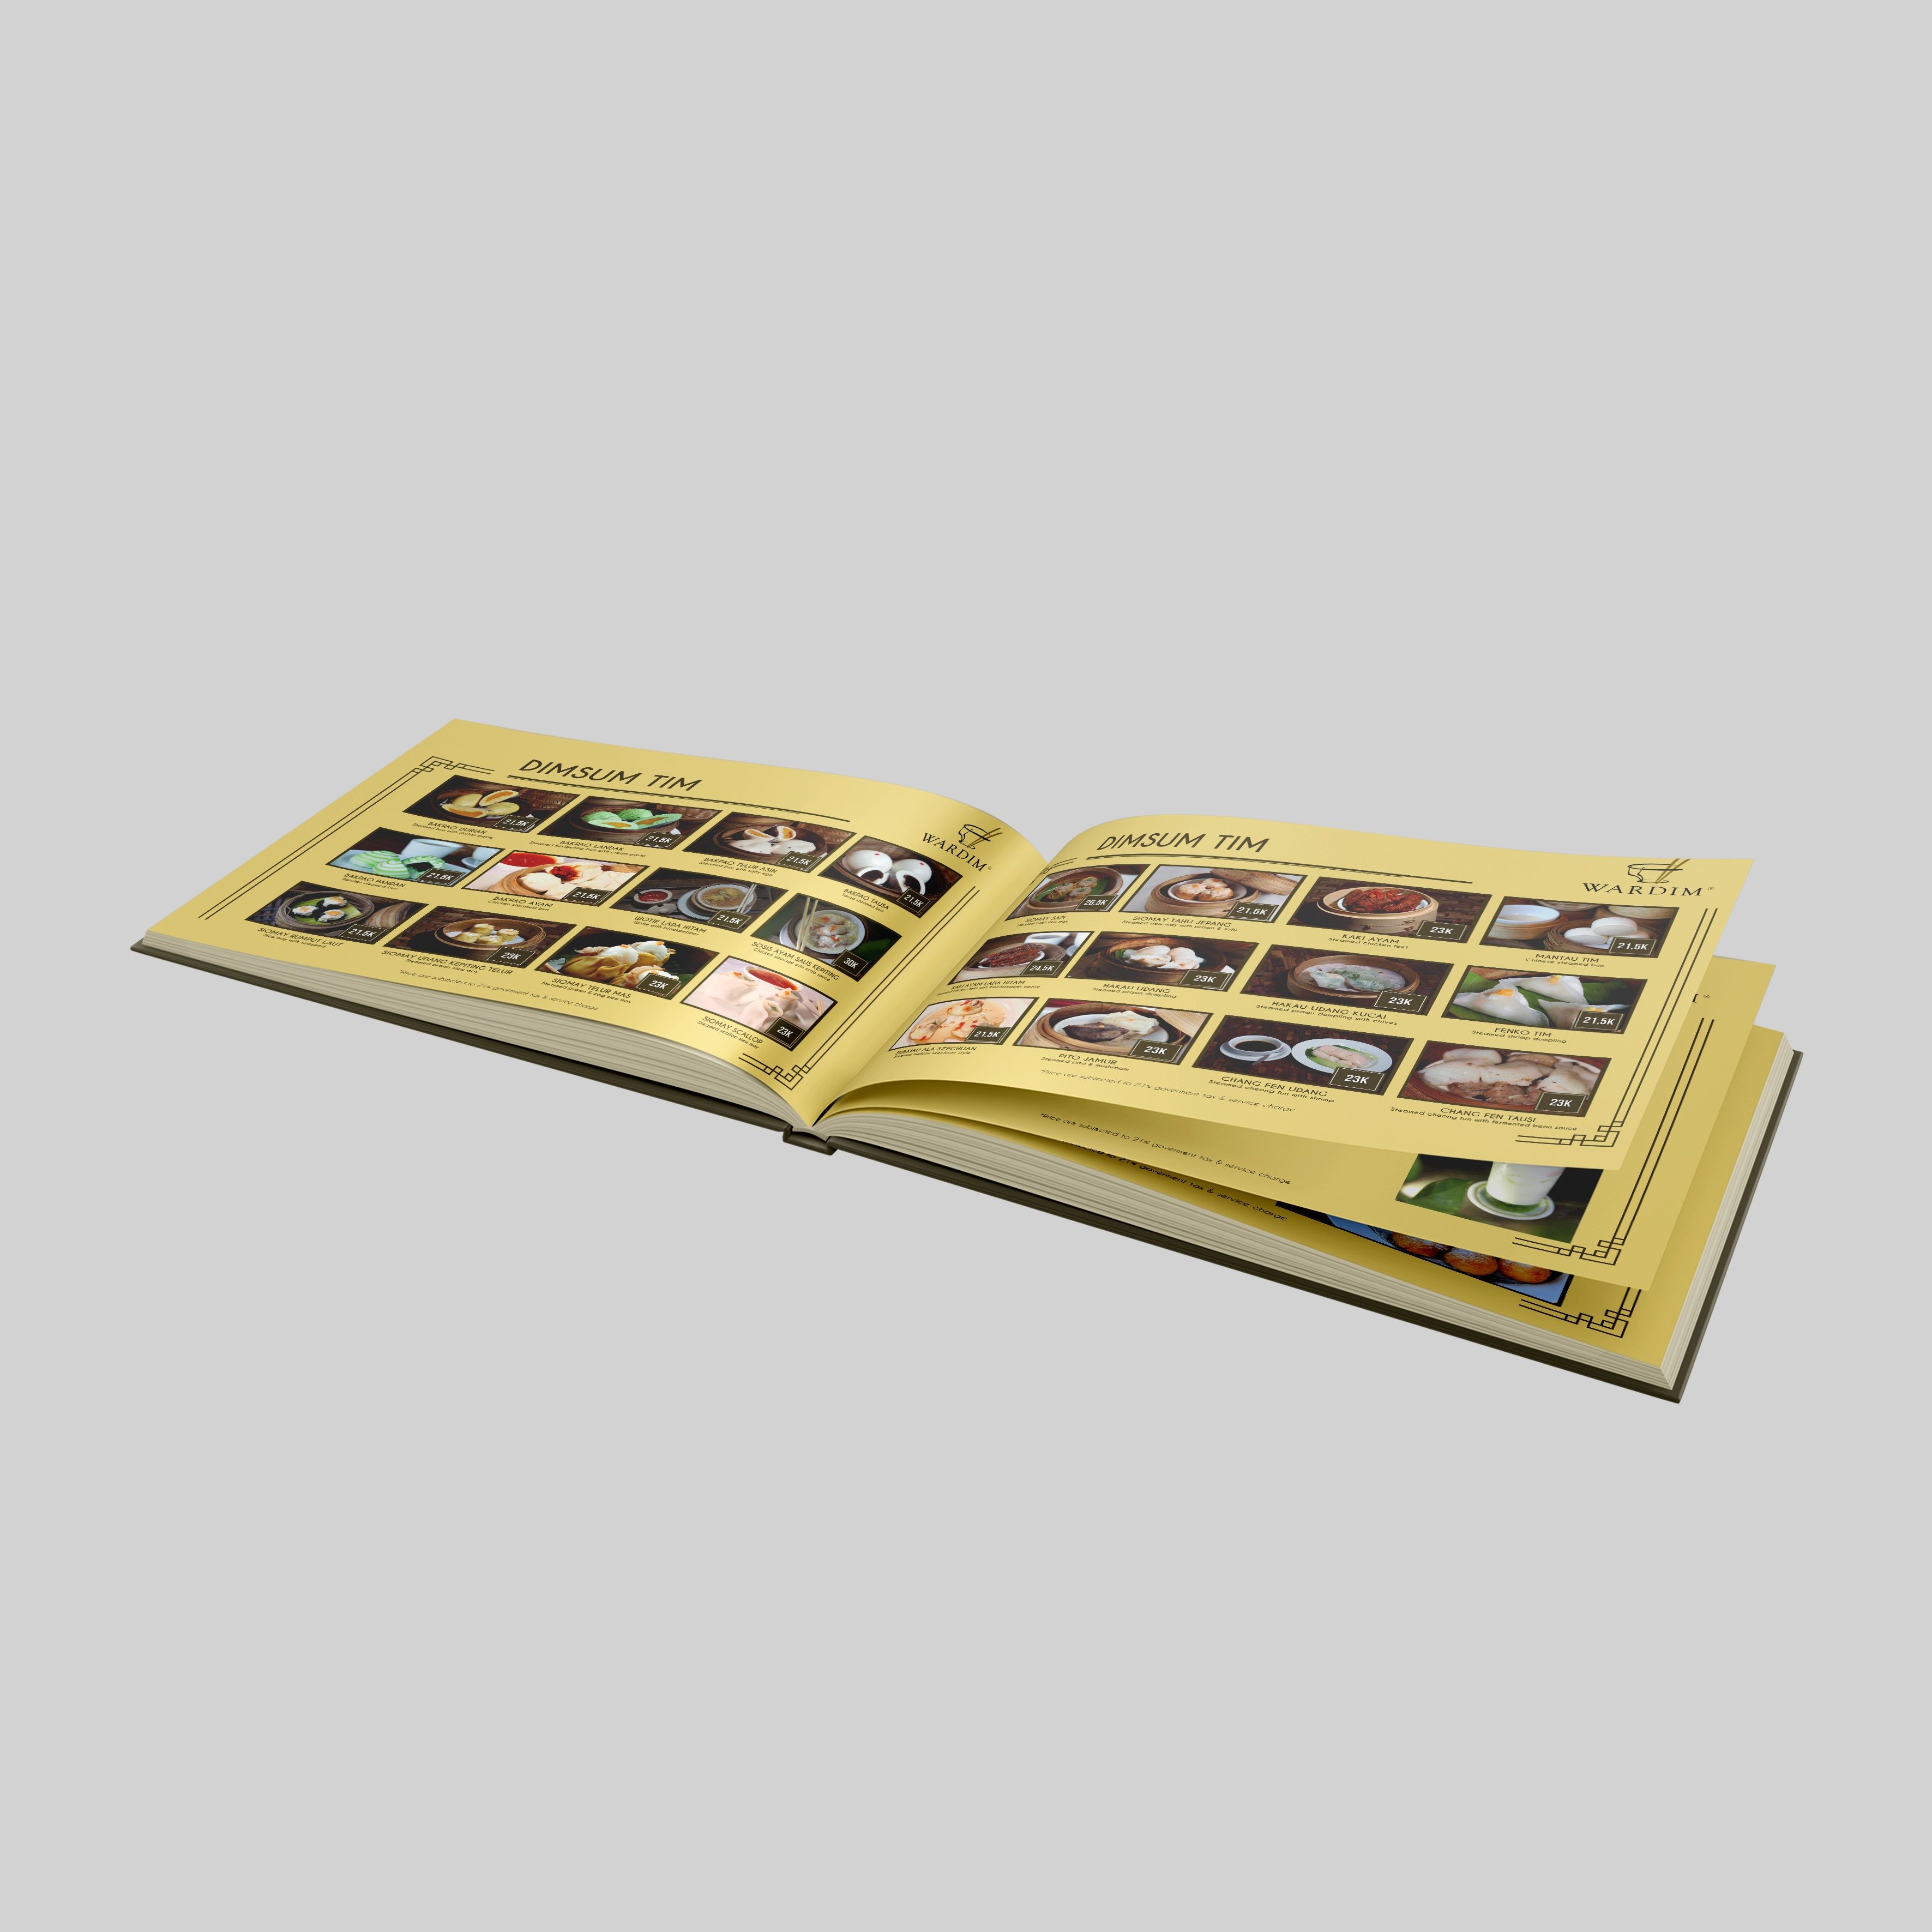 Desain Katalog dari ghozidzikri